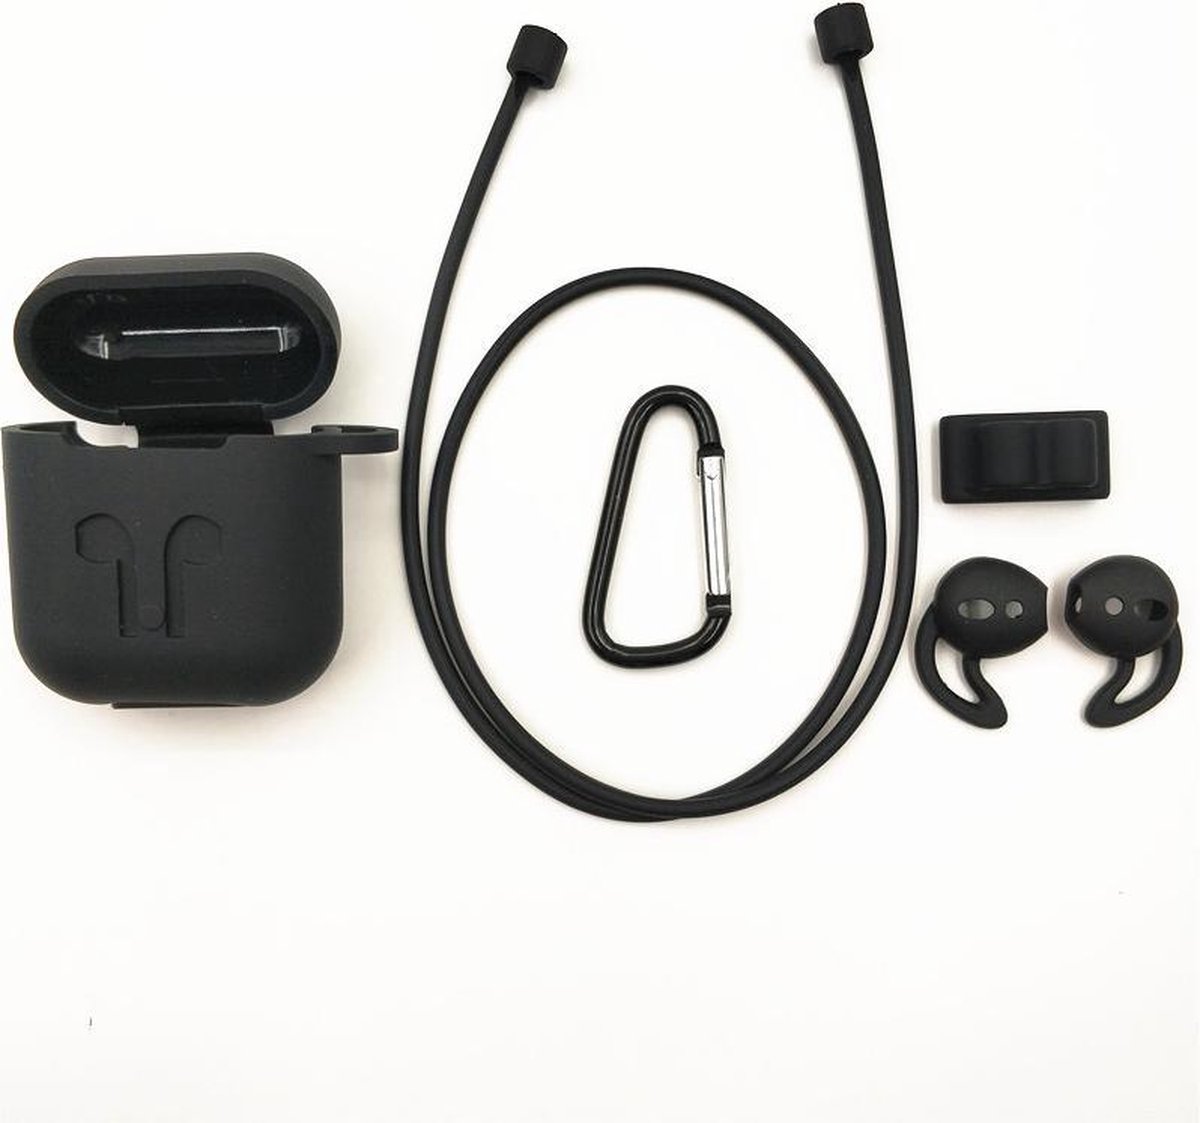 Siliconen beschermhoes cover + anti verlies strap voor Apple Airpods Accessoires set - Zwart